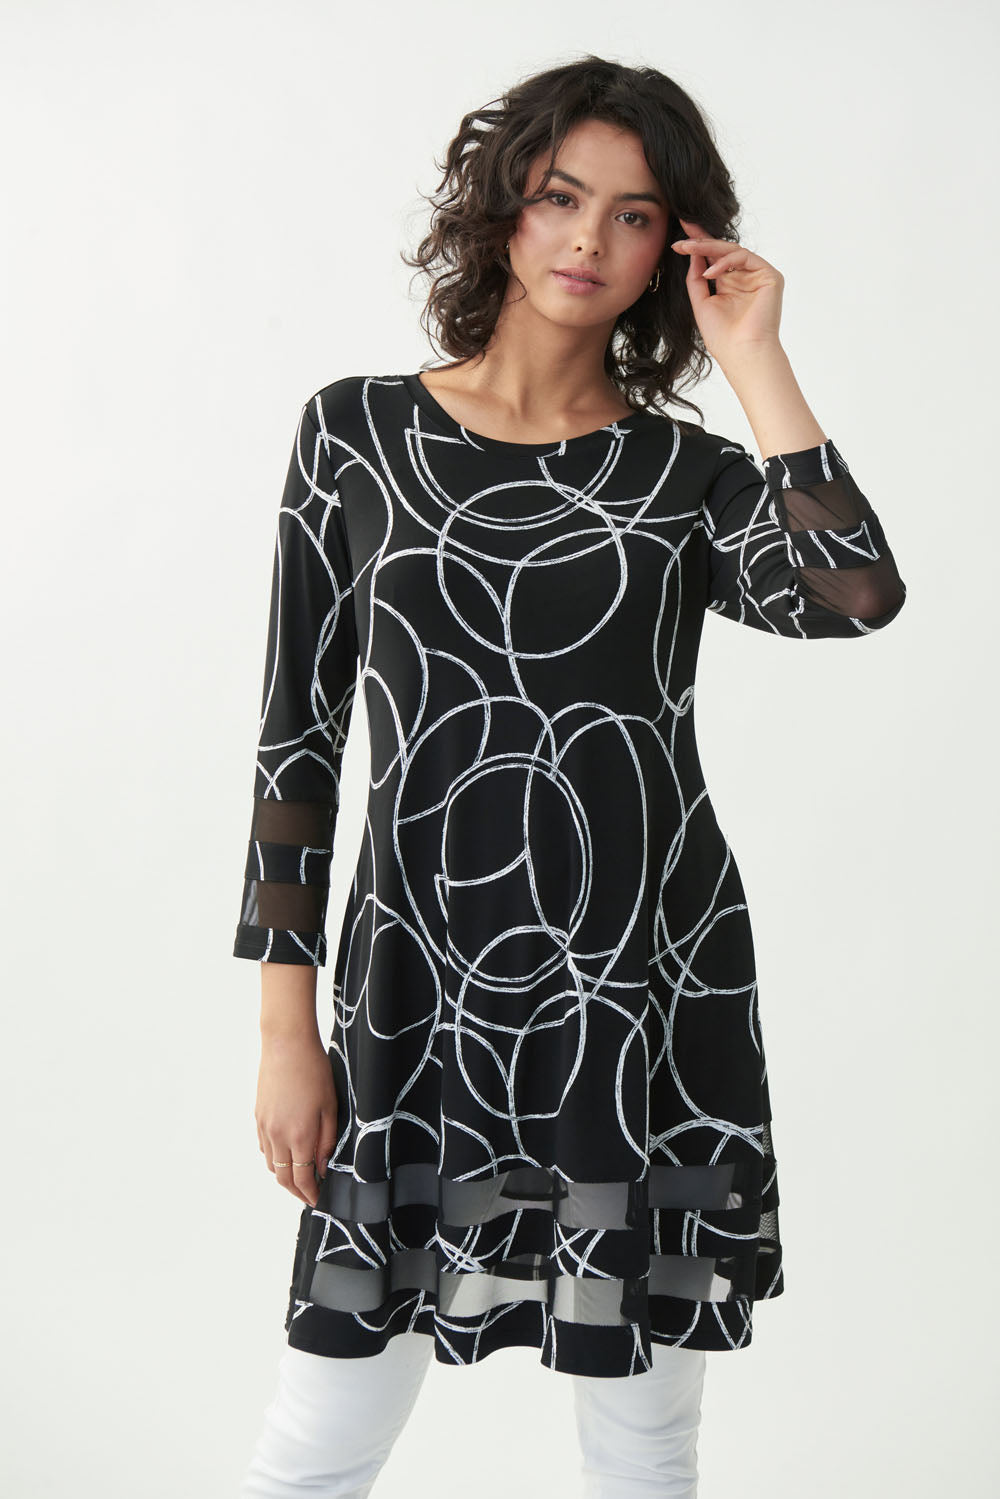 Joseph Ribkoff Black-Vanilla Circle Print Dress Style 221211